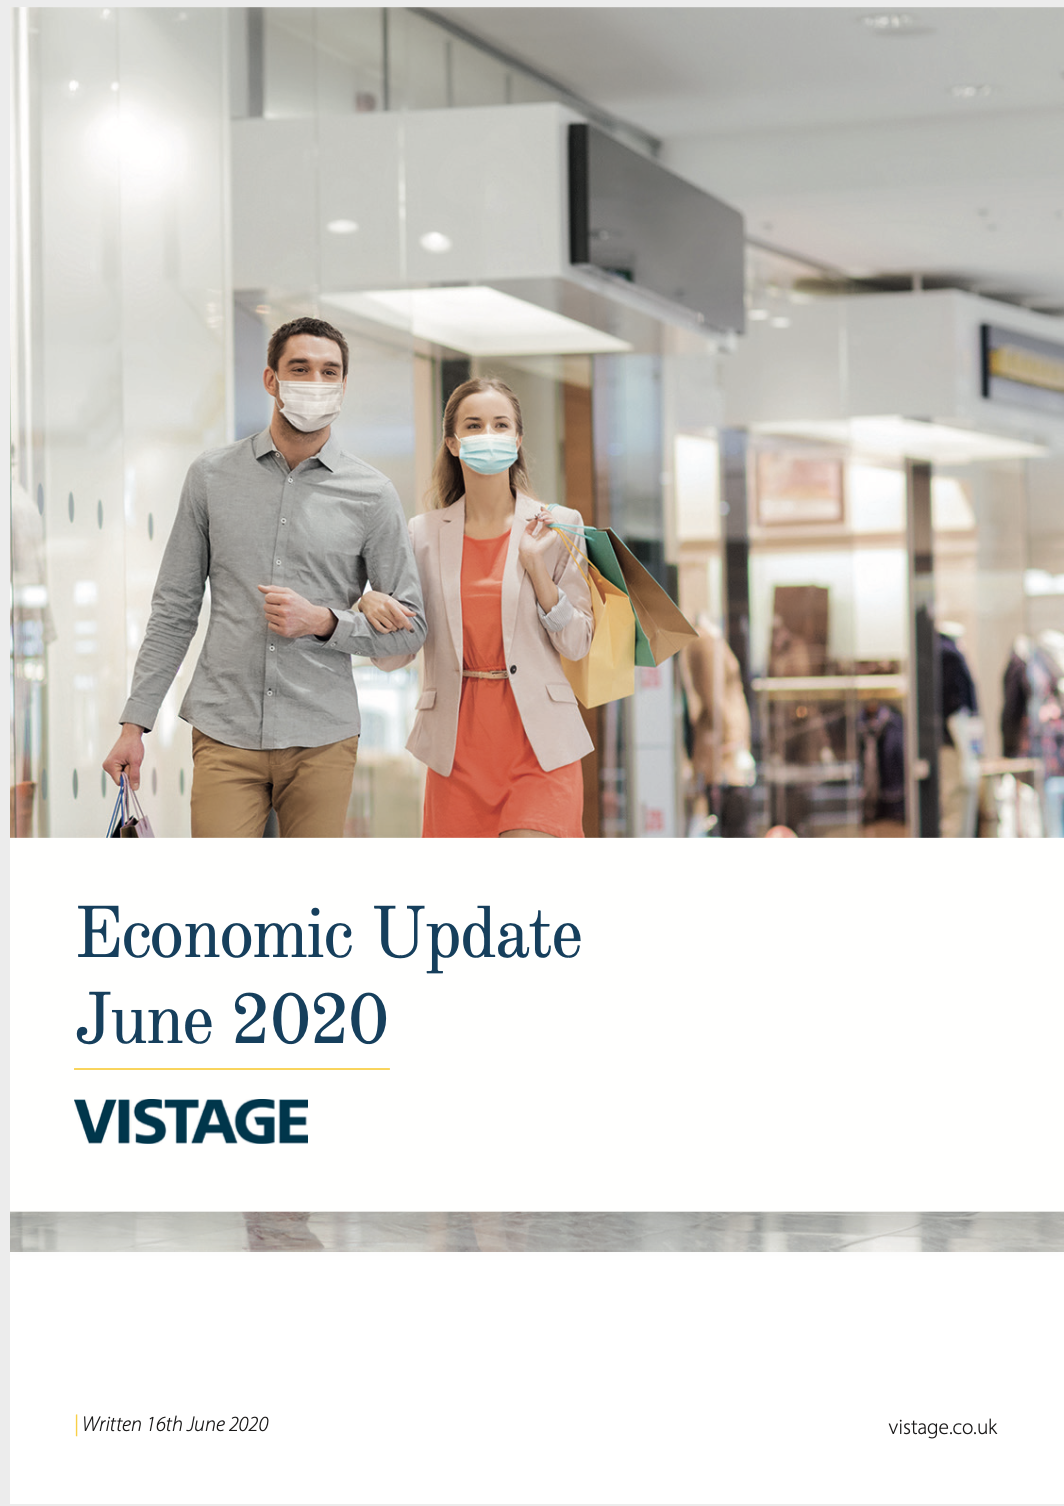 Vistage Economic Update - June 2020